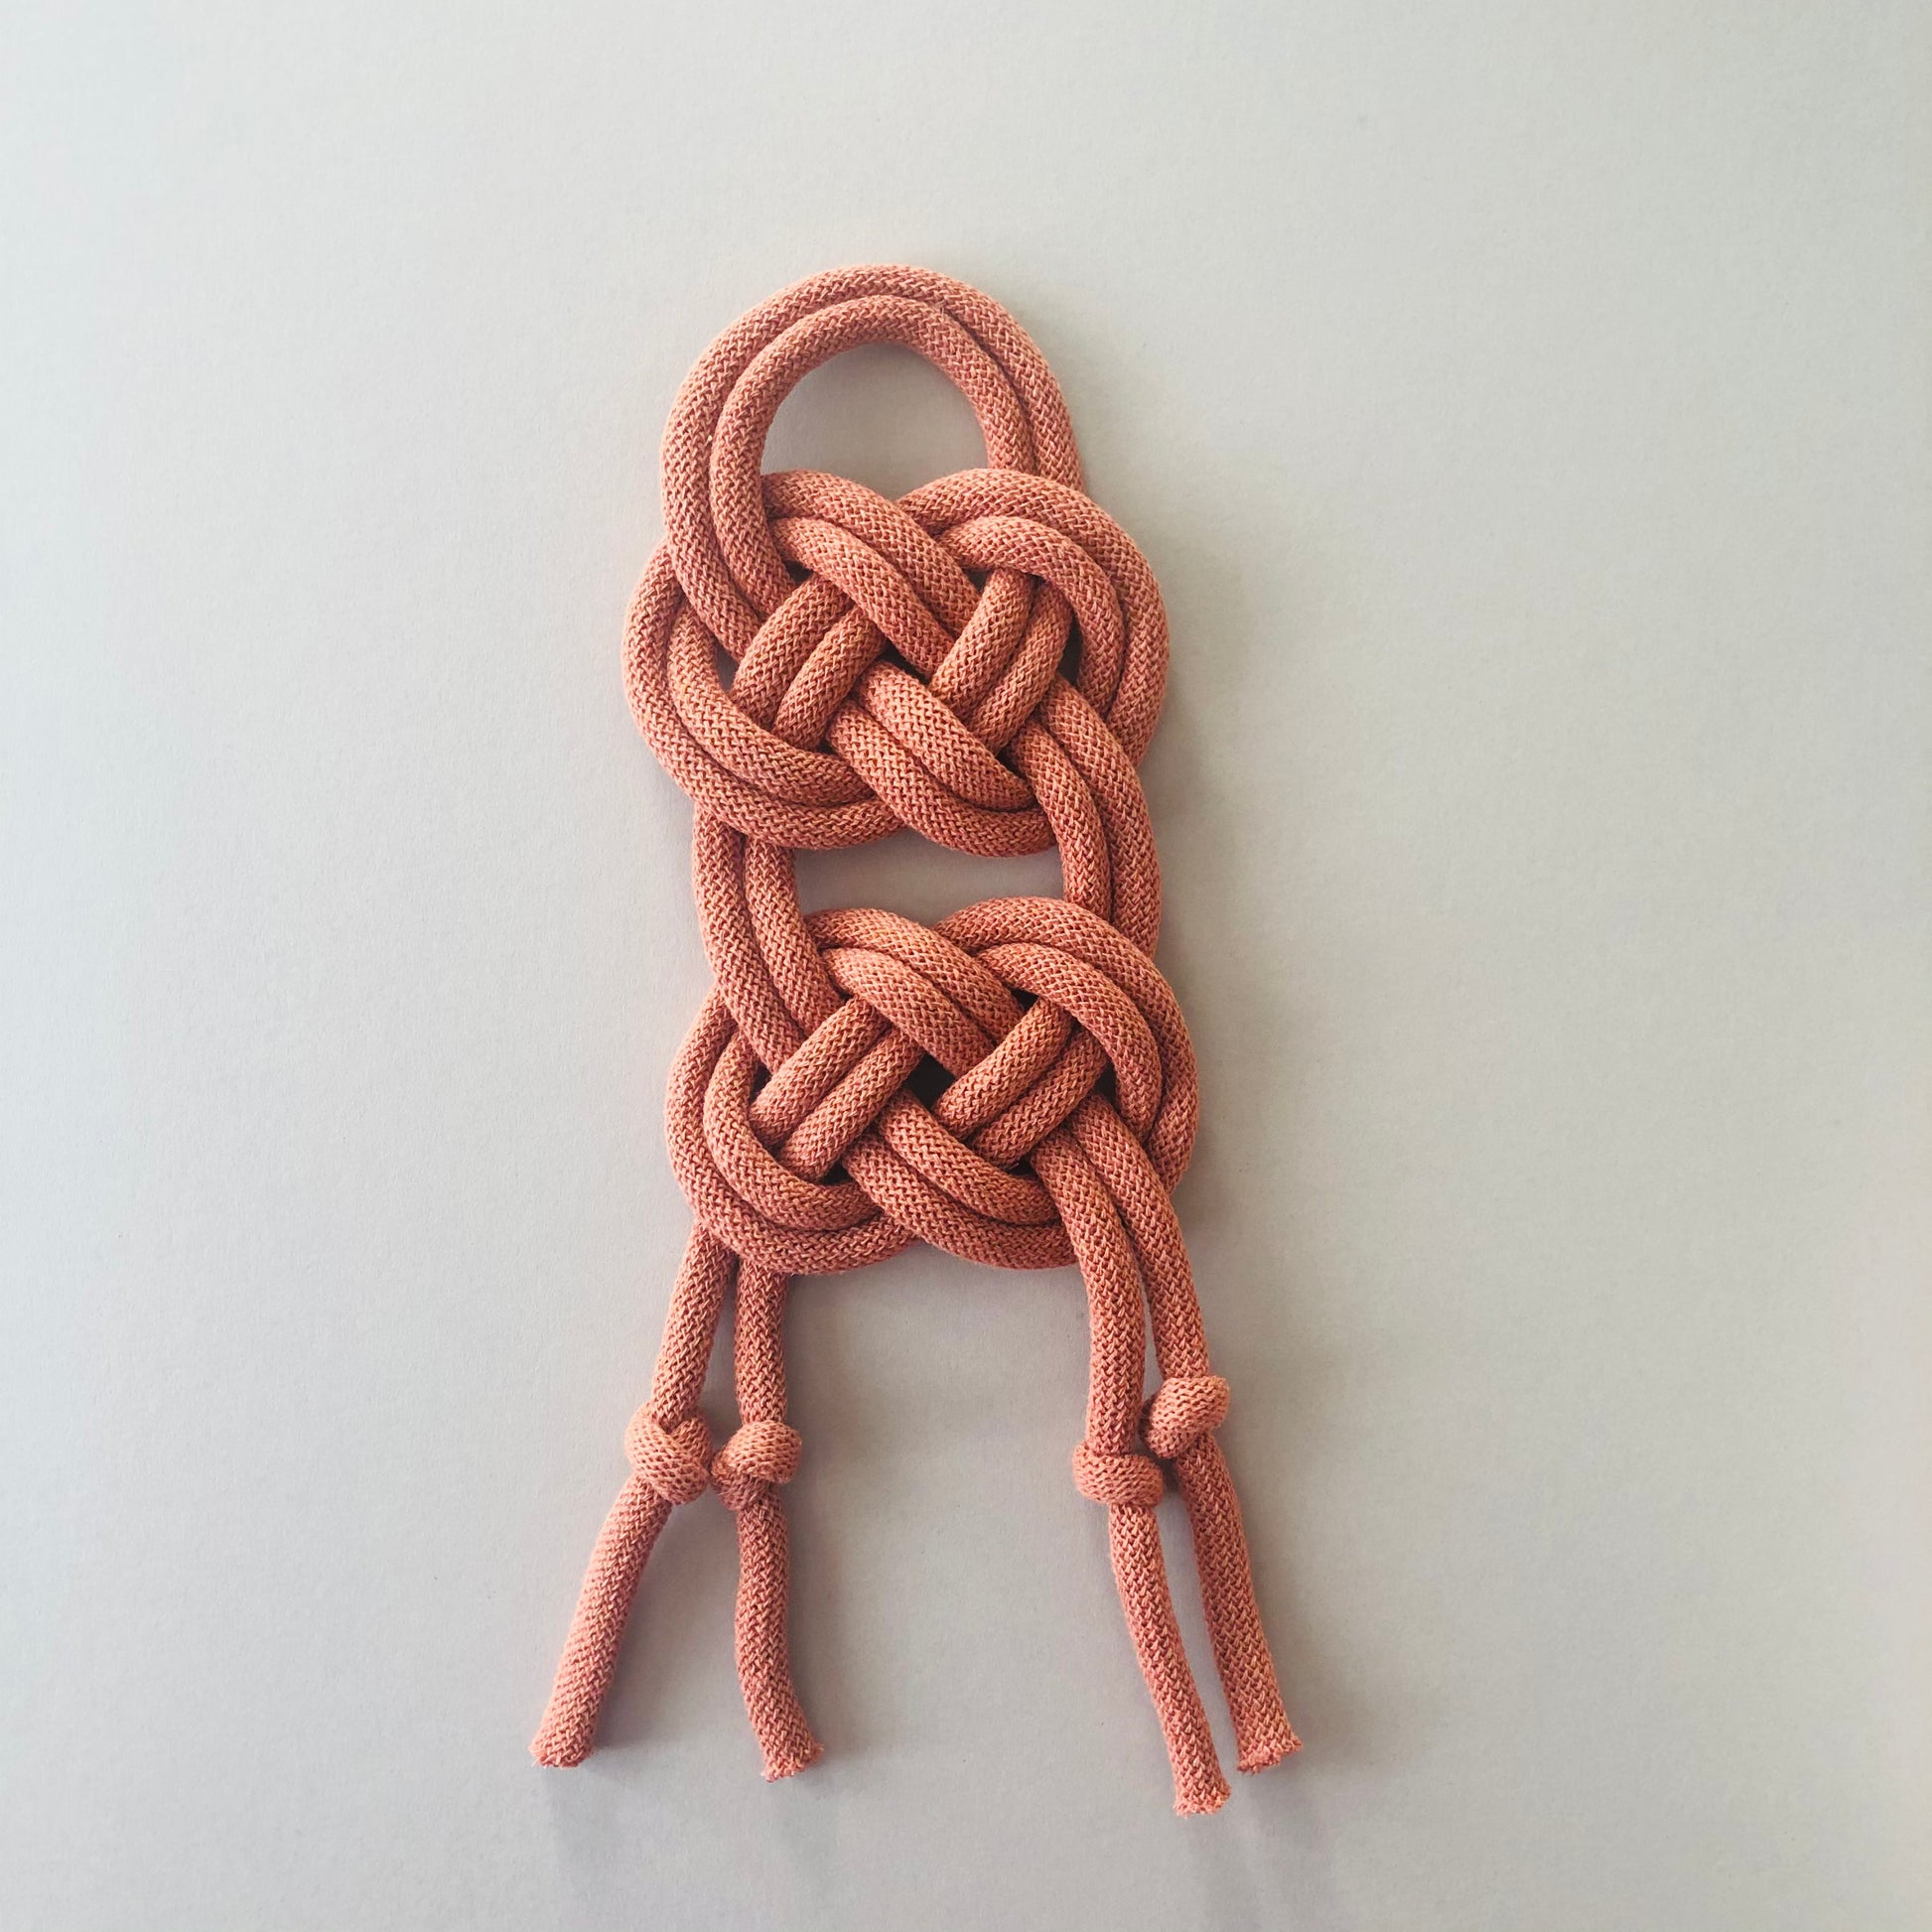 Wall Knot ‘Noomi’ - Macrame wall hanging - knottinger.